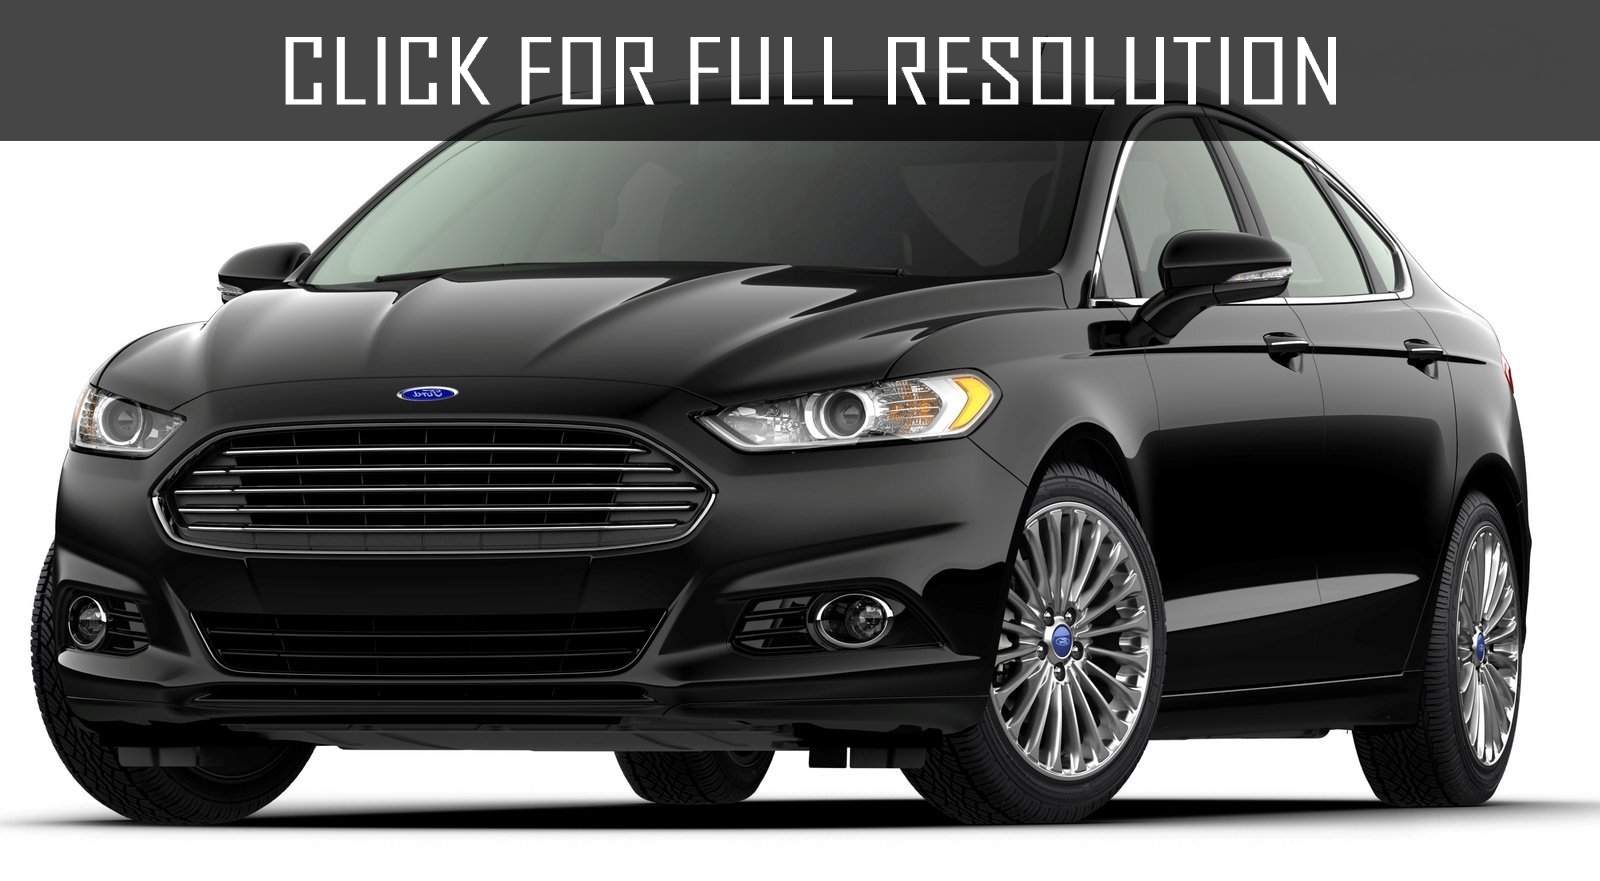 Ford Fusion 2014 Black